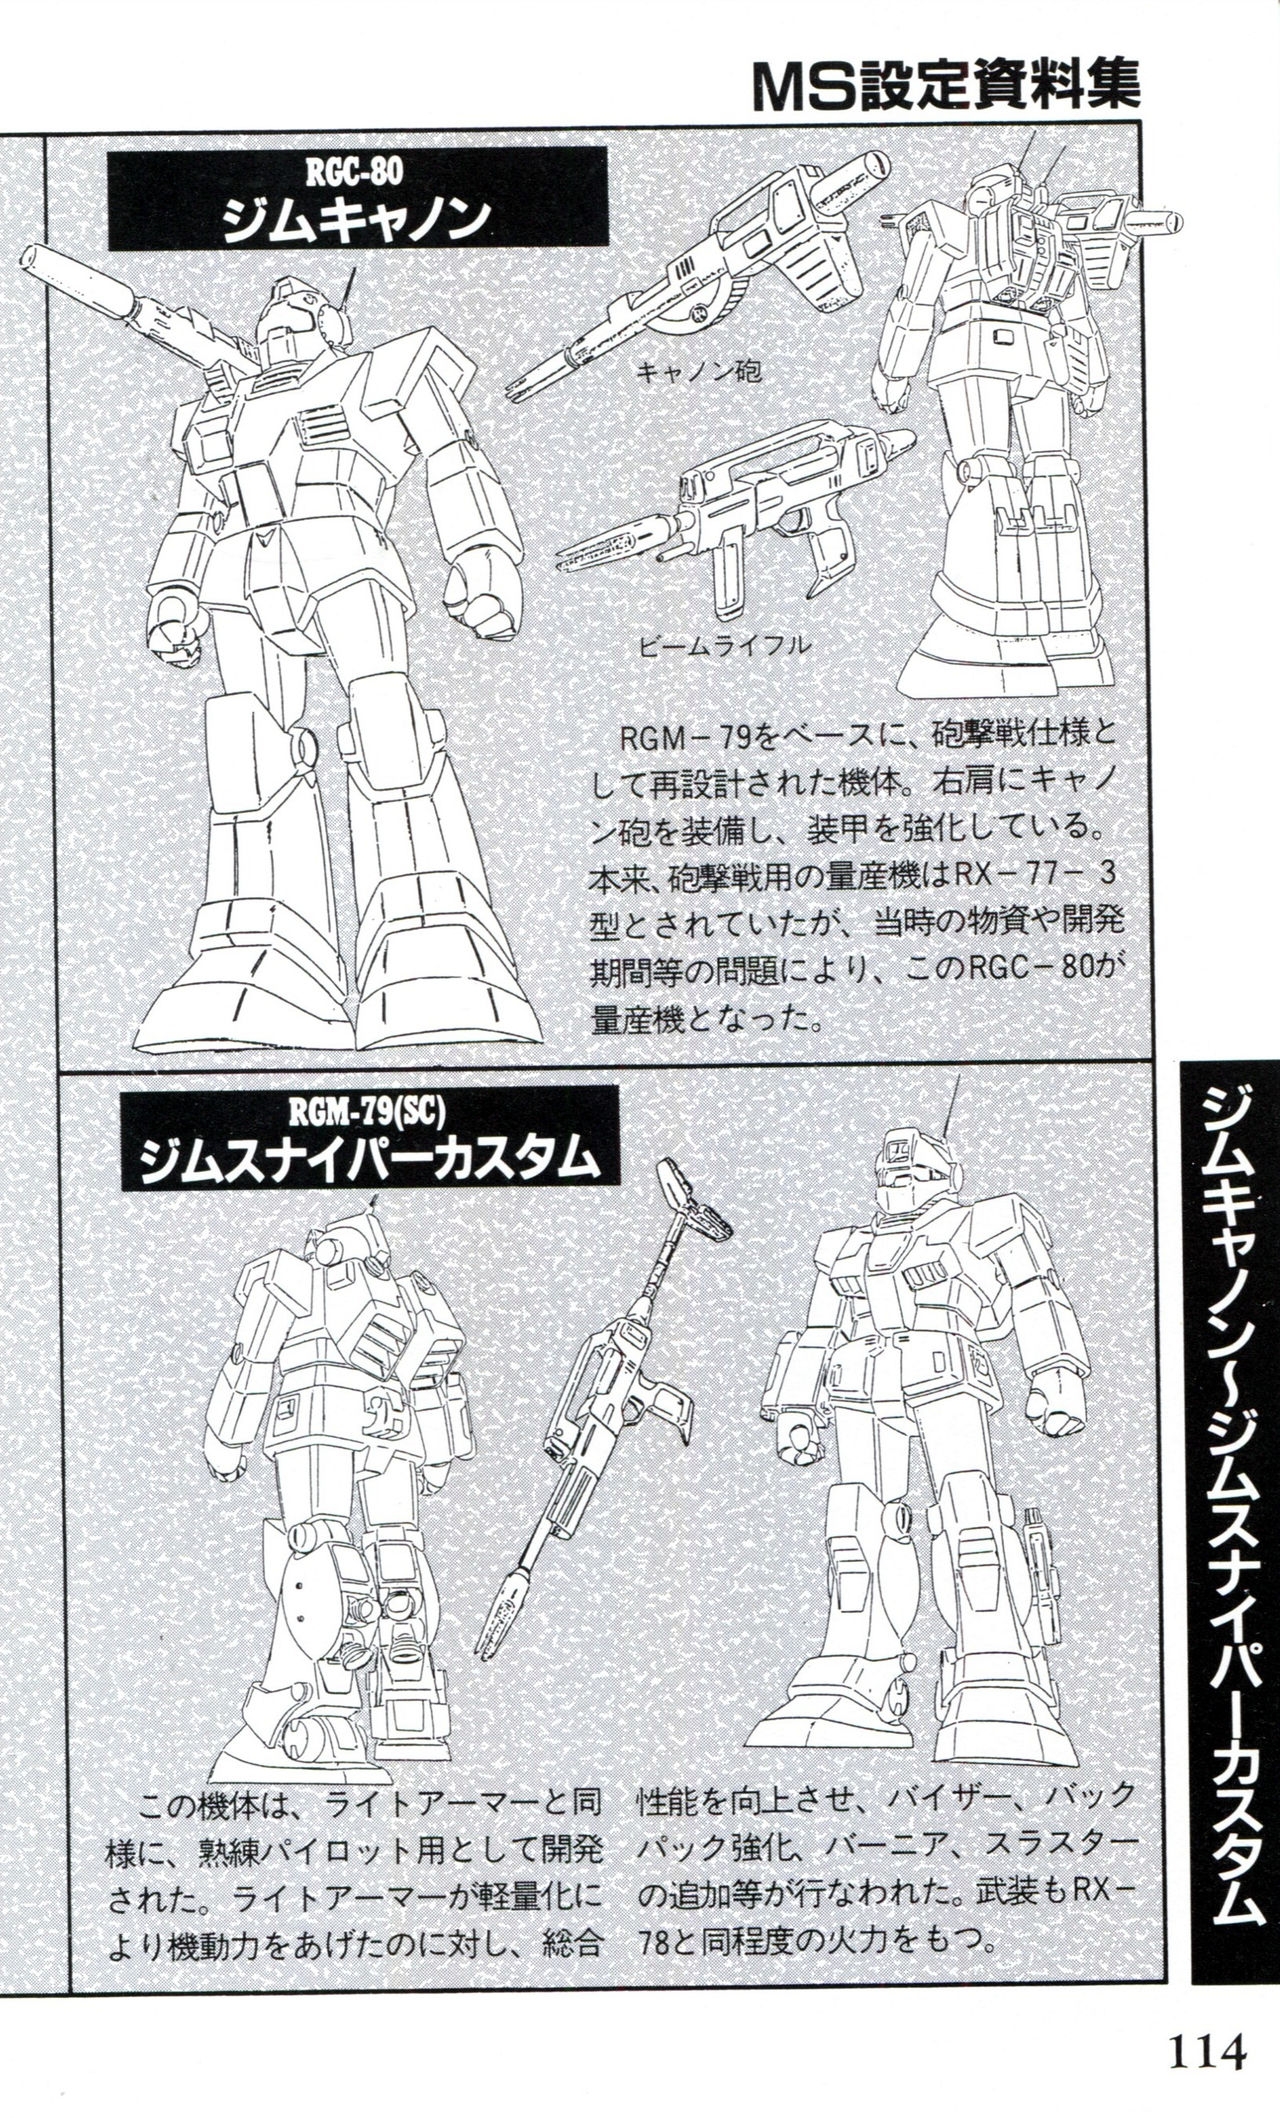 Mobile Suit Gundam U.C. Box MS Gundam Encyclopedia NO.01 - Mobile Suit Gundam 113